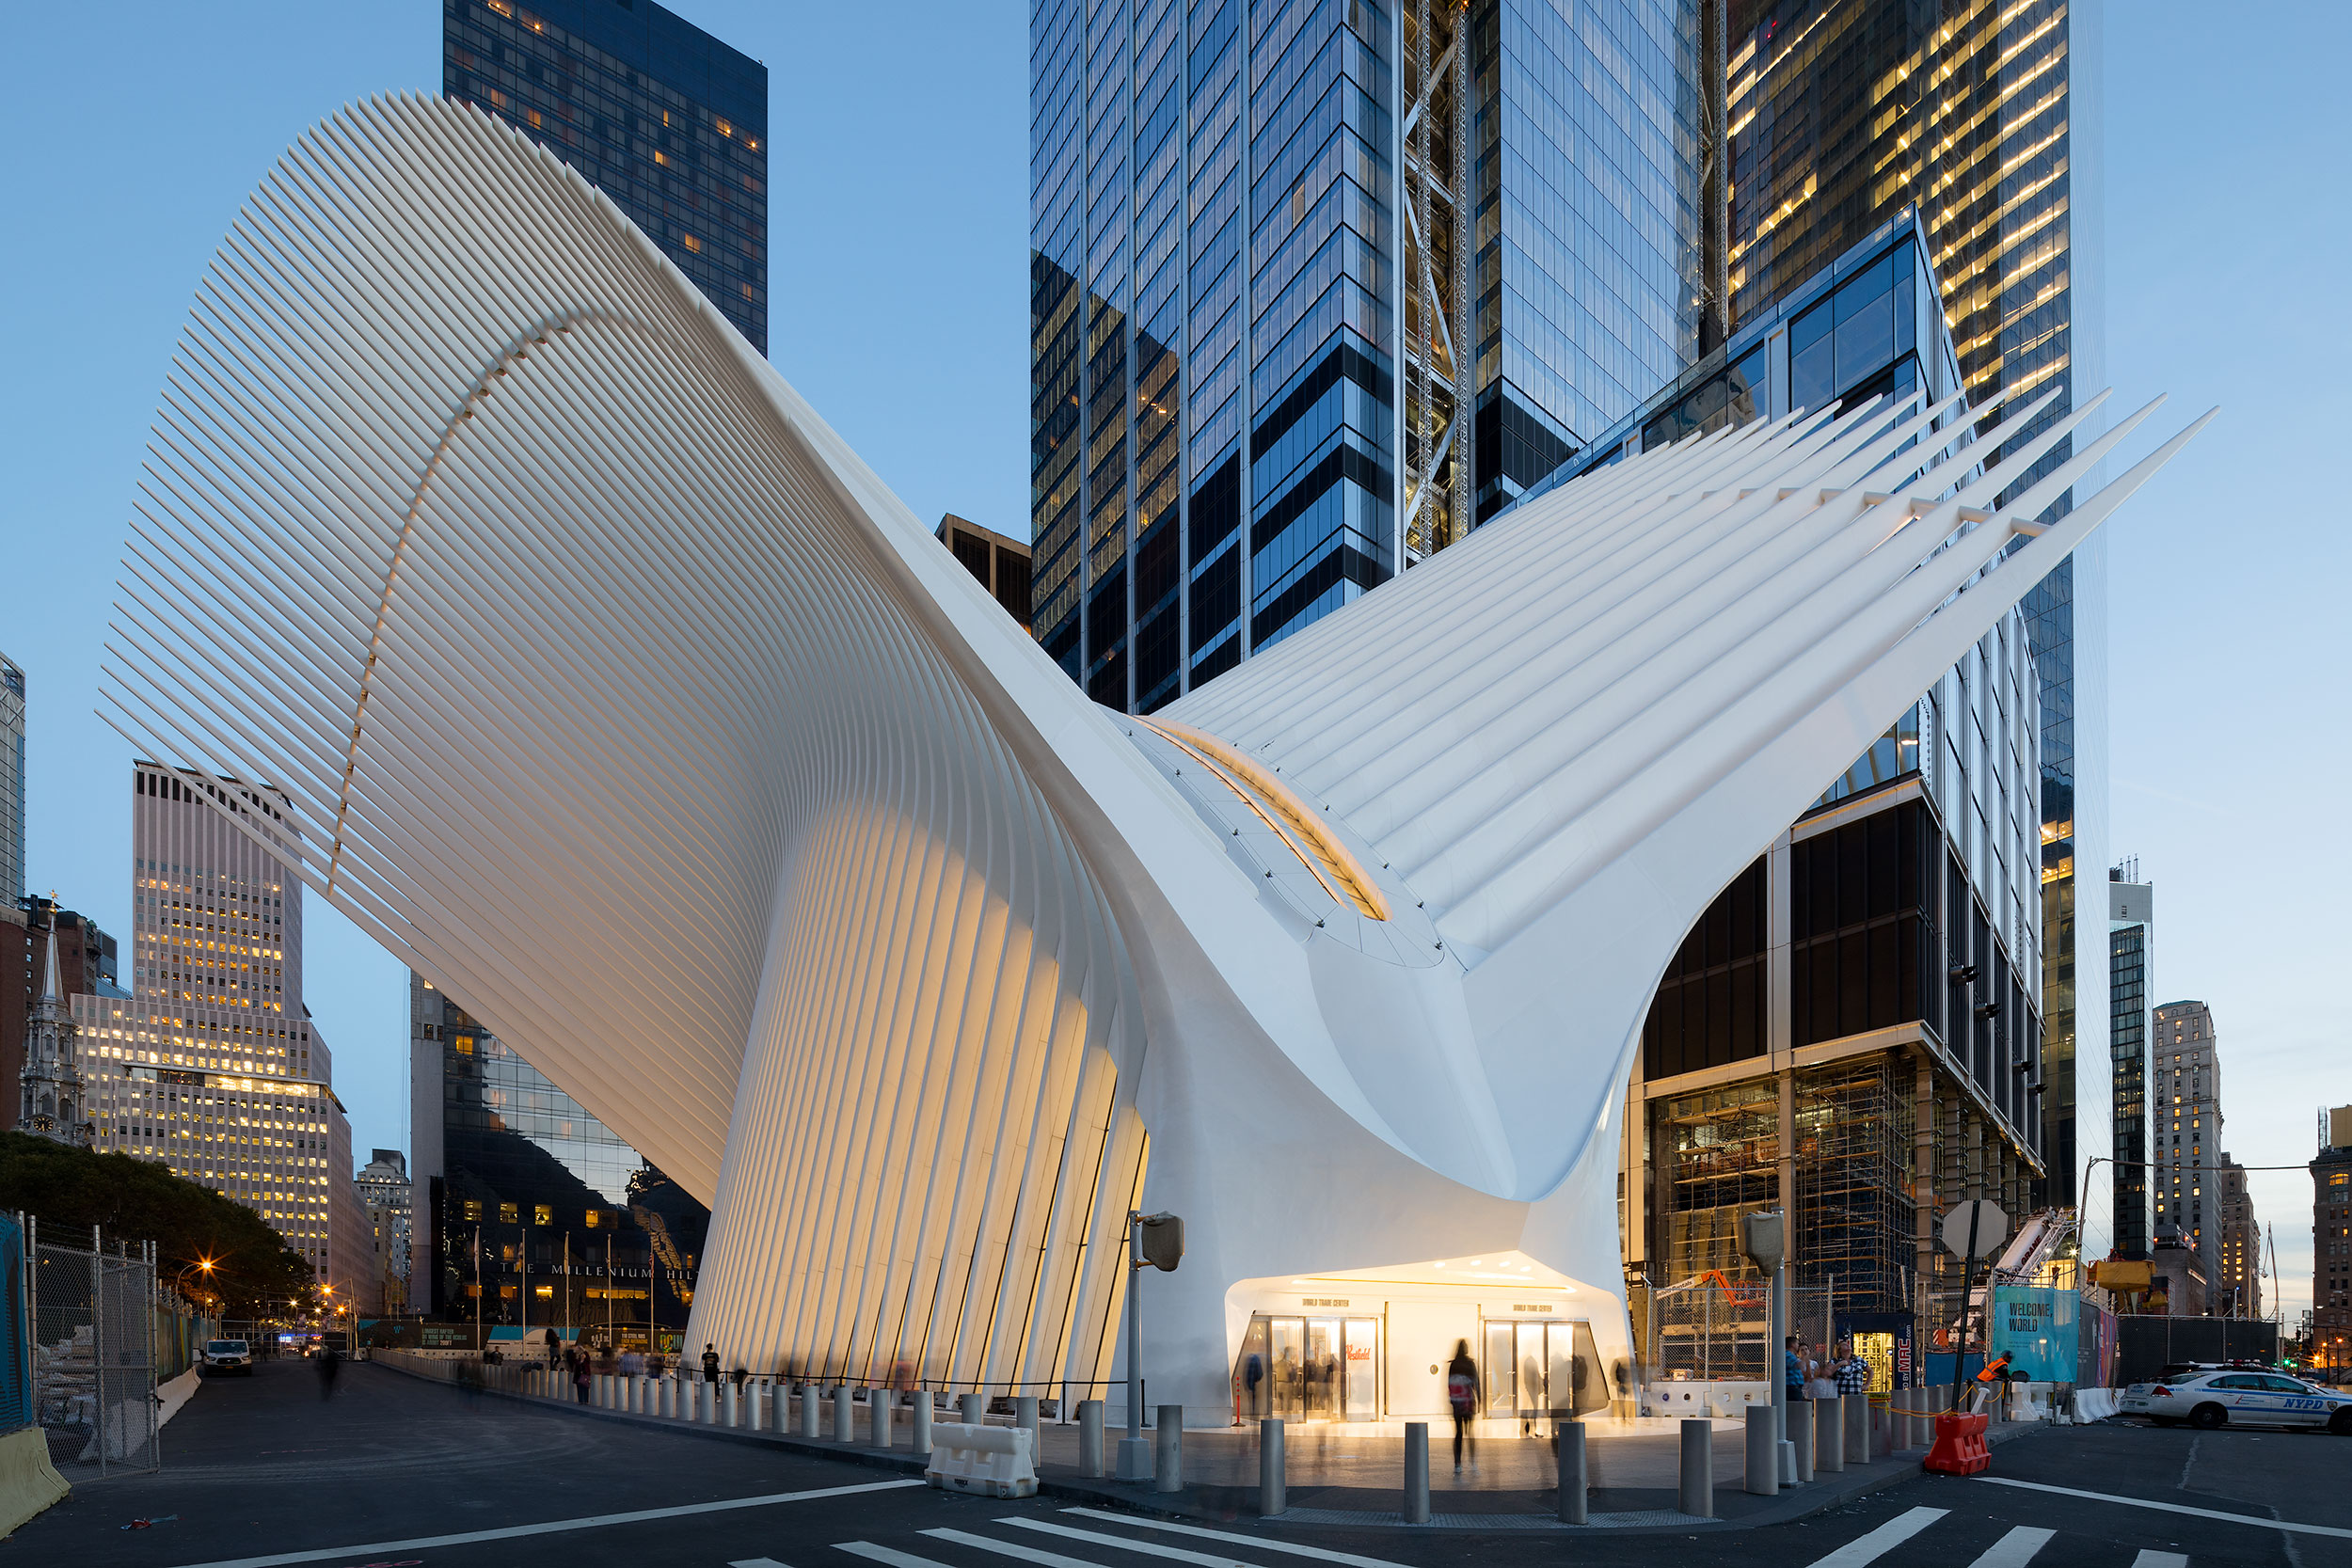 Night Photo, The Oculus, Manhattan, New York, Architecture